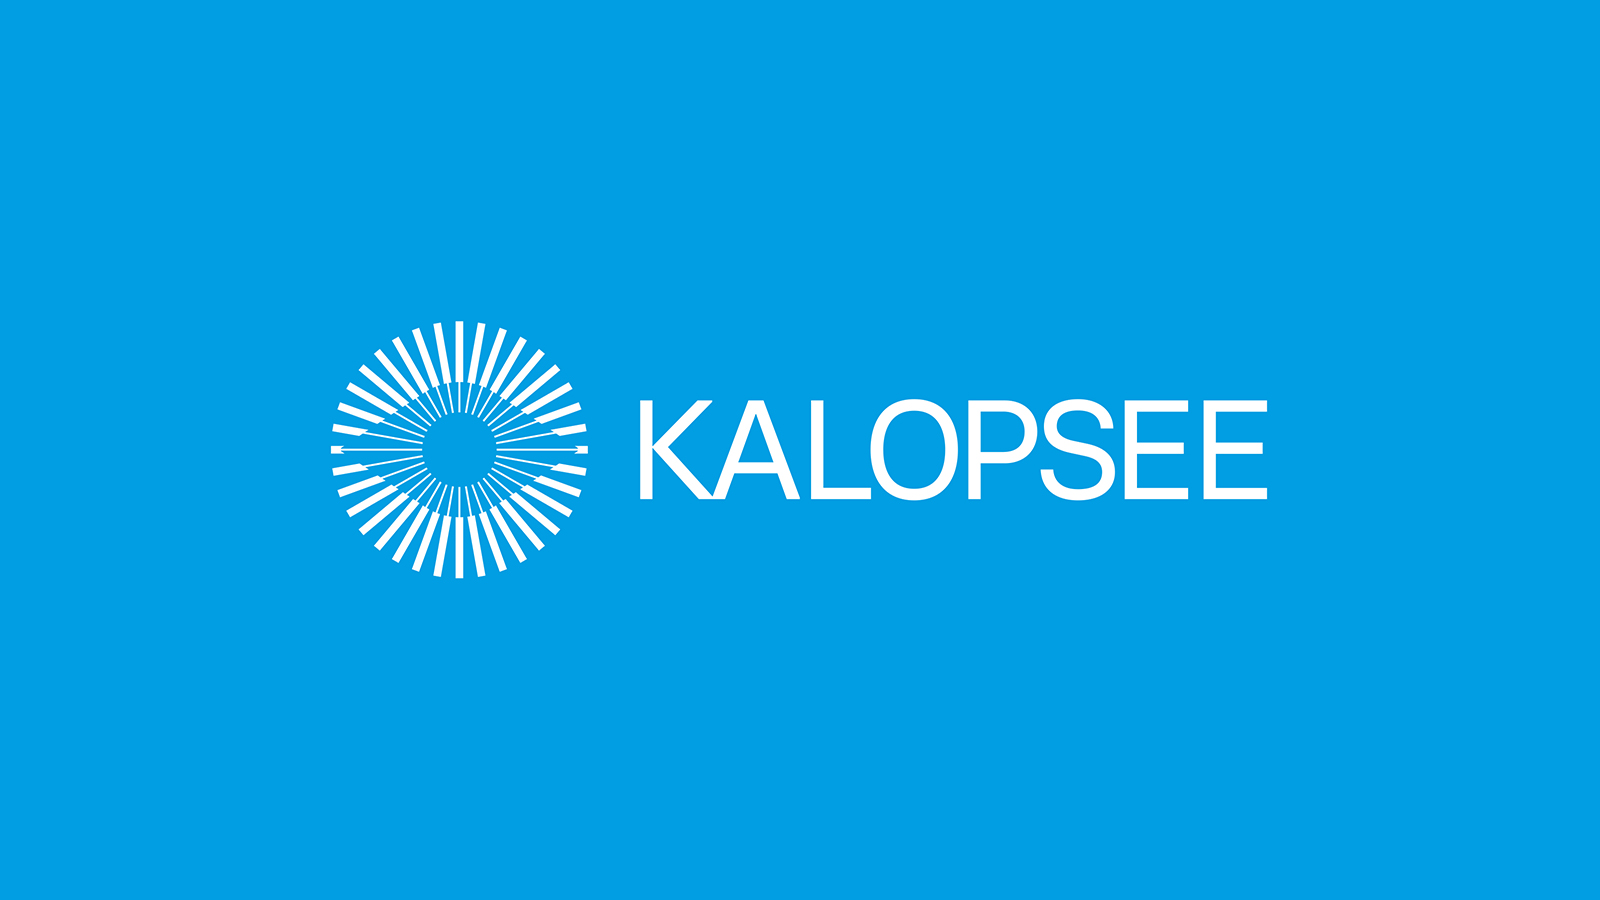 Kalopsee - Branding and Visual Identity